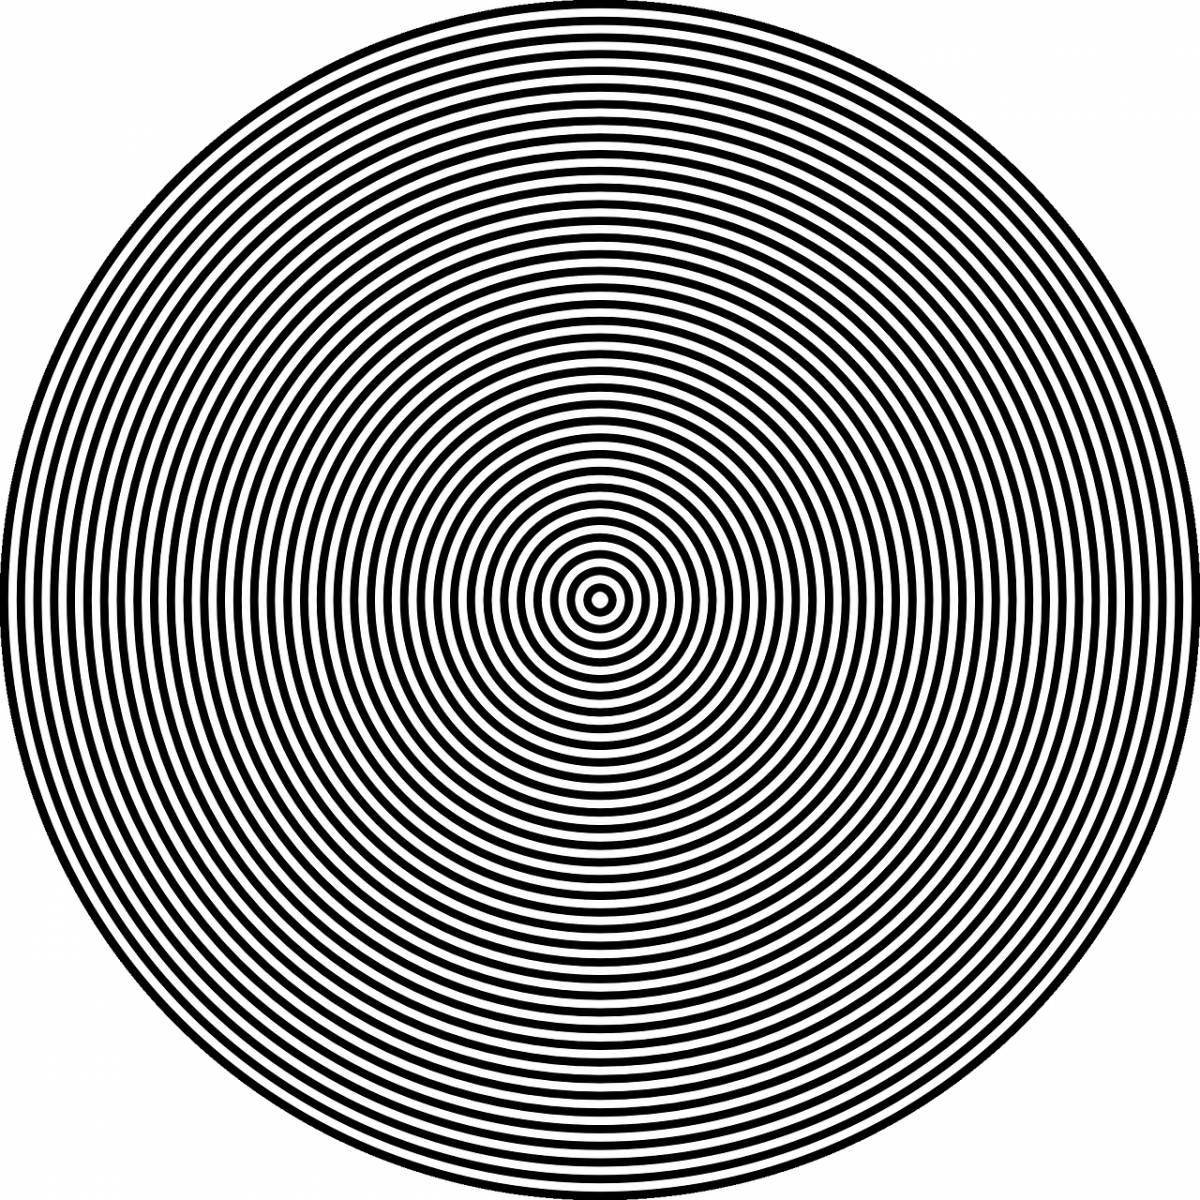 Hypnotic Spiral Portrait Coloring